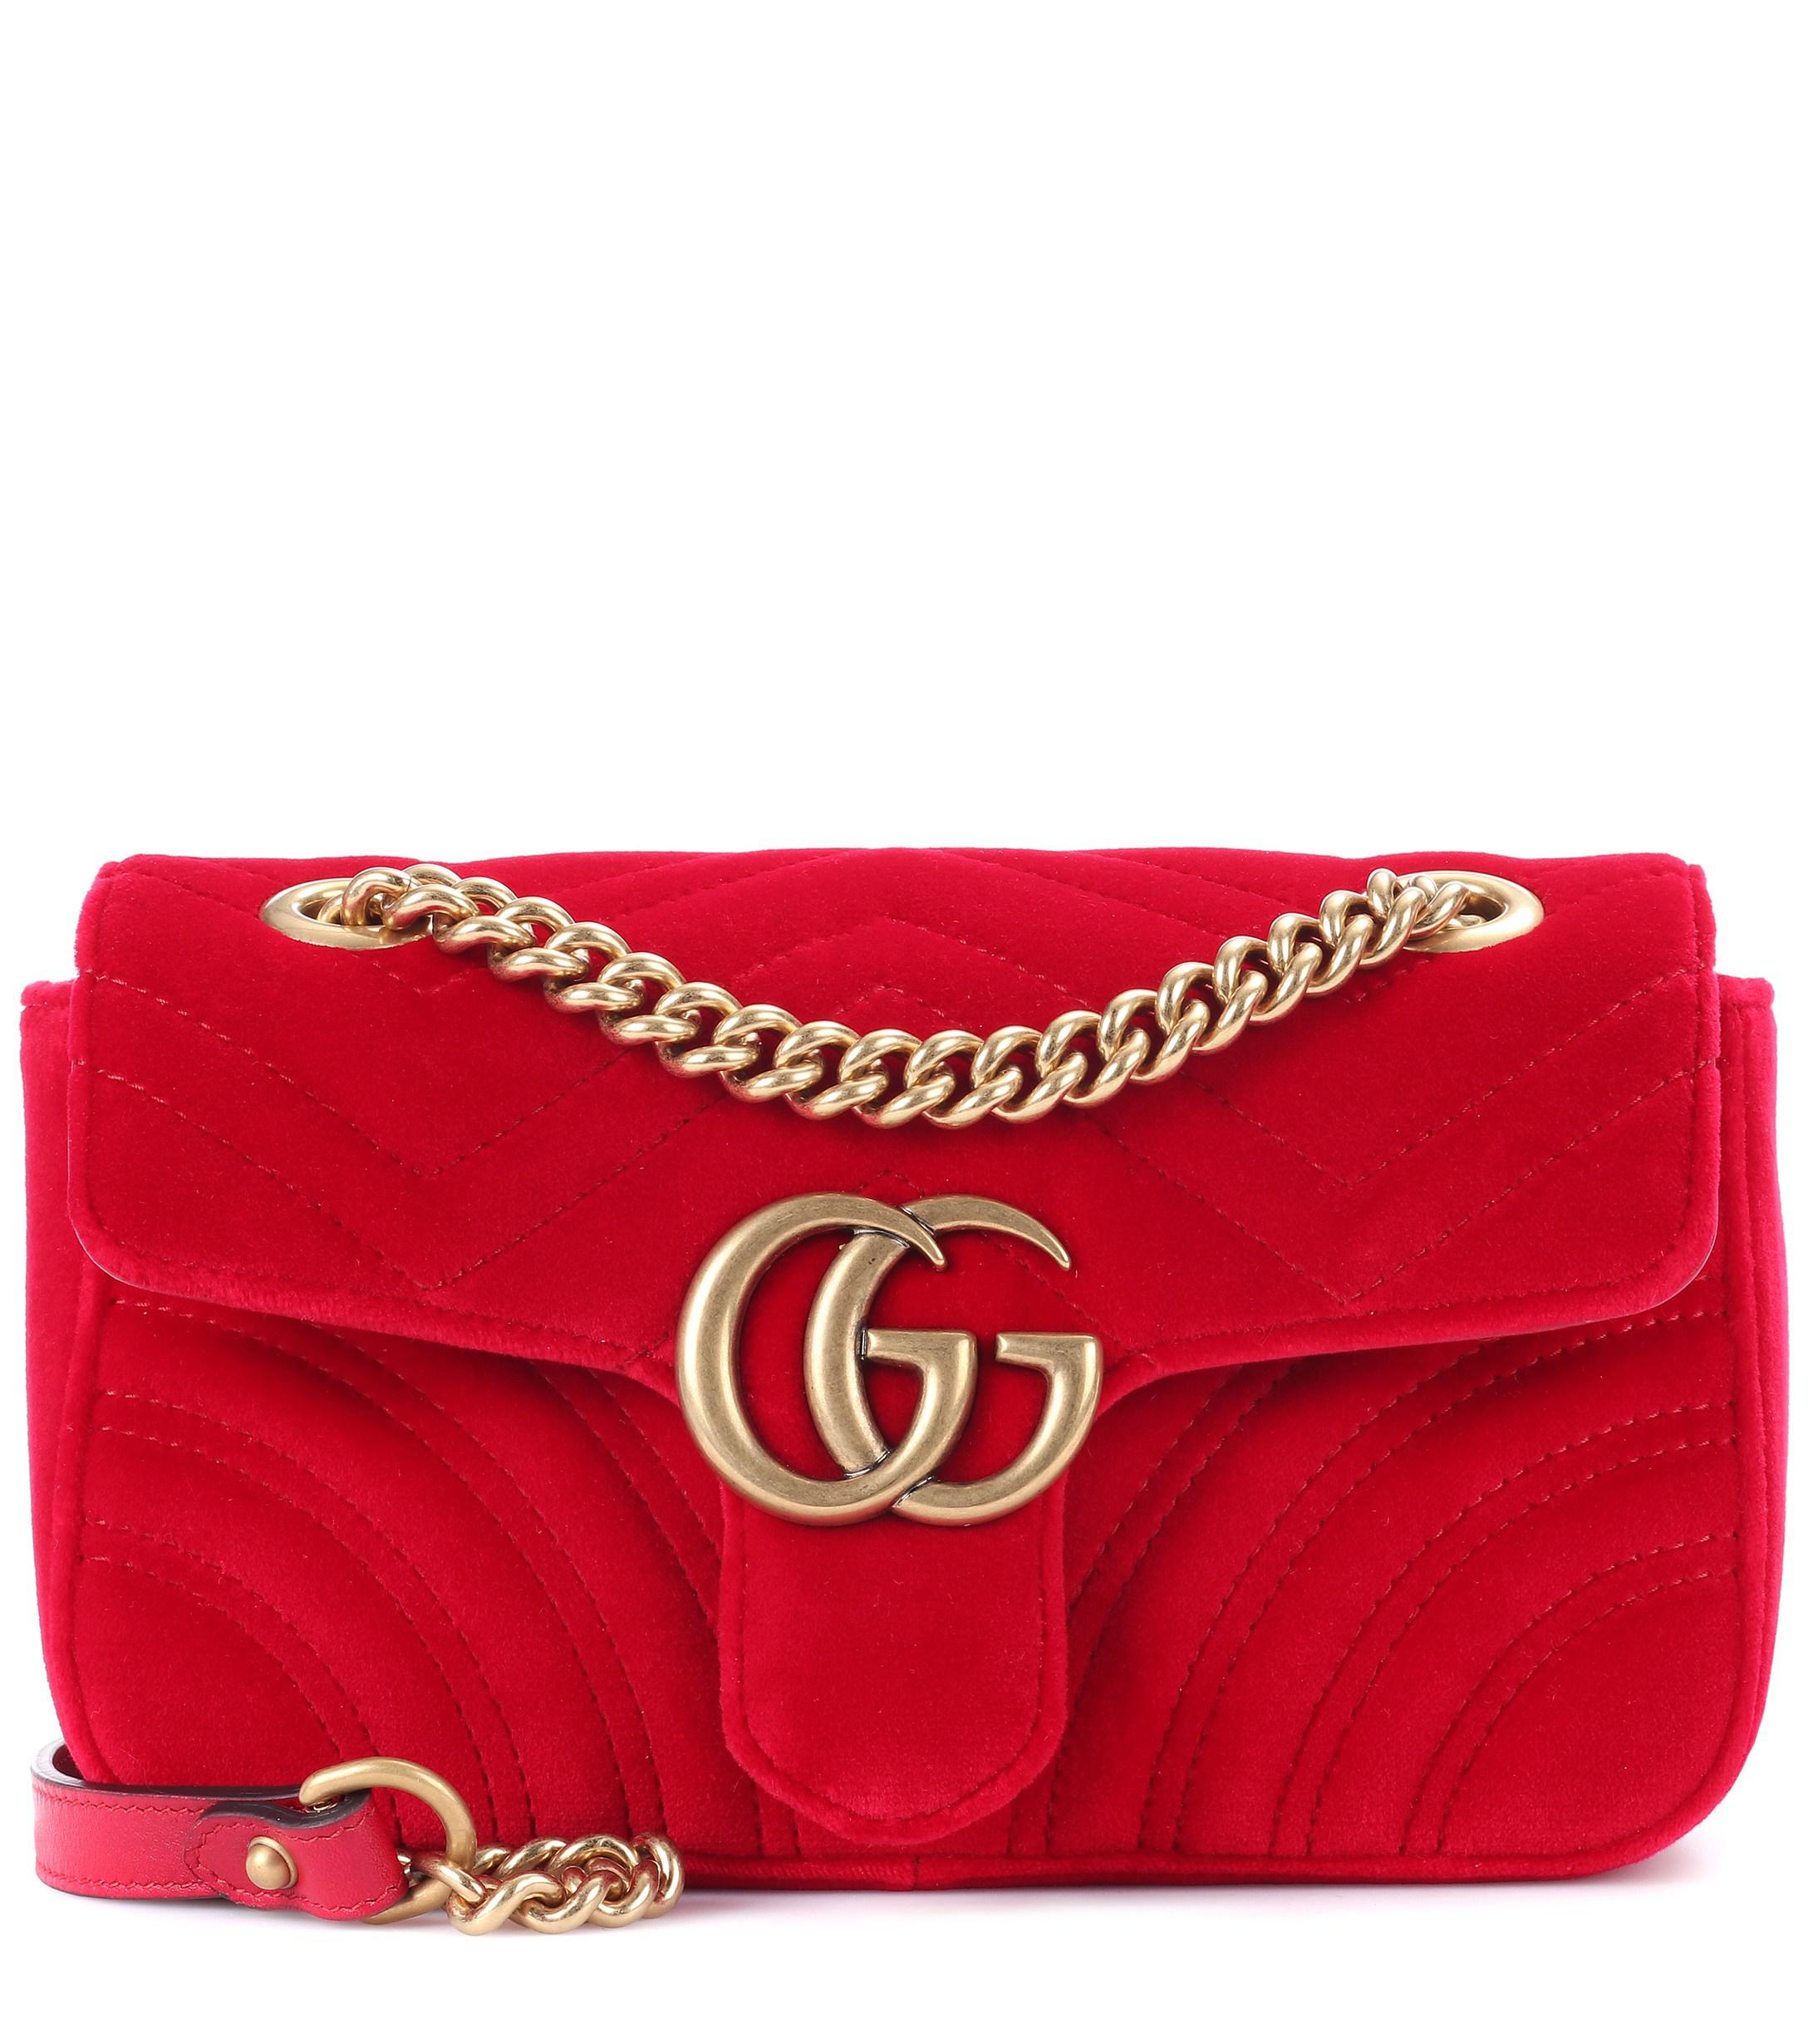 Lyst - Gucci Gg Marmont Mini Velvet Shoulder Bag in Red